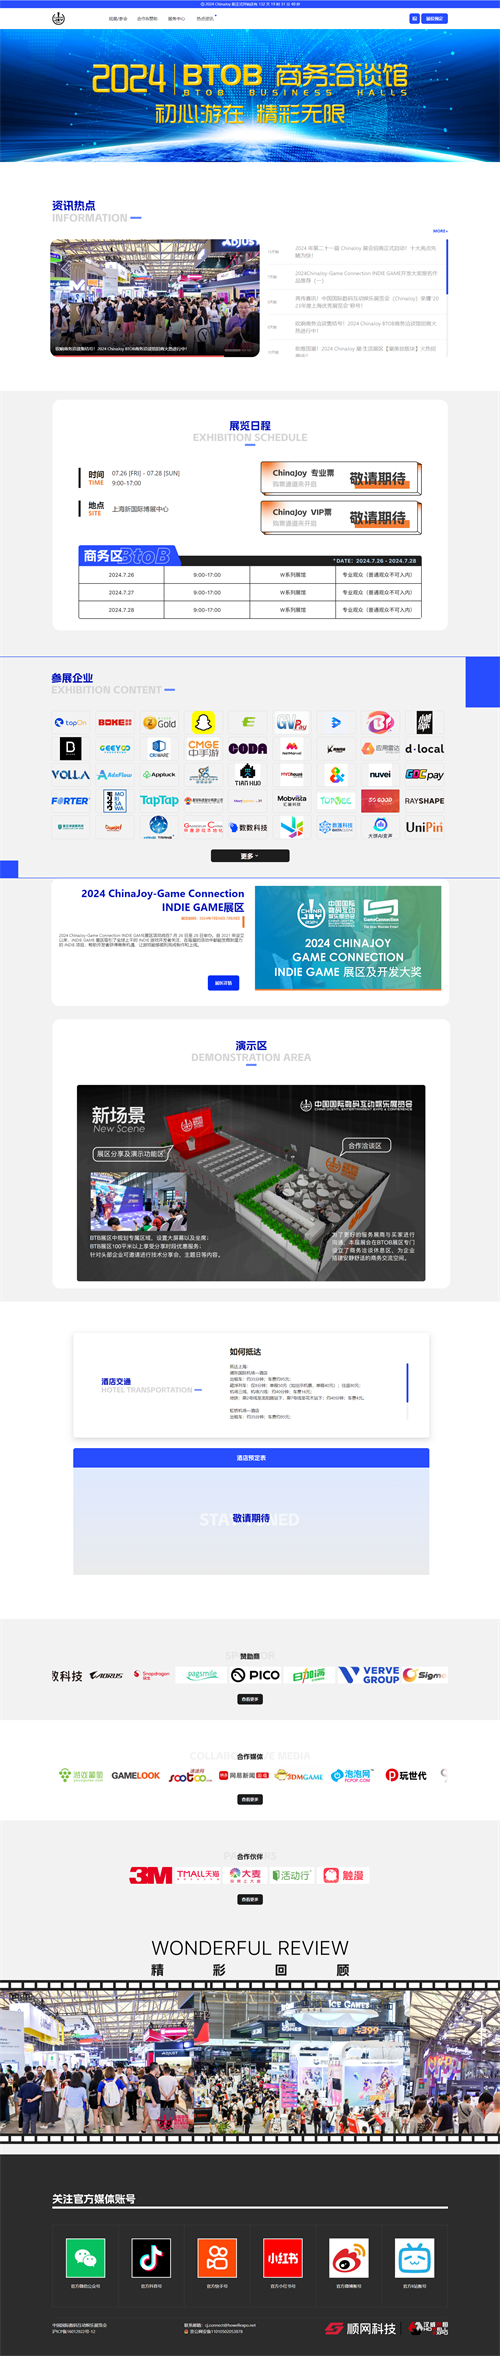 全新升级：ChinaJoy 新官网已上线！